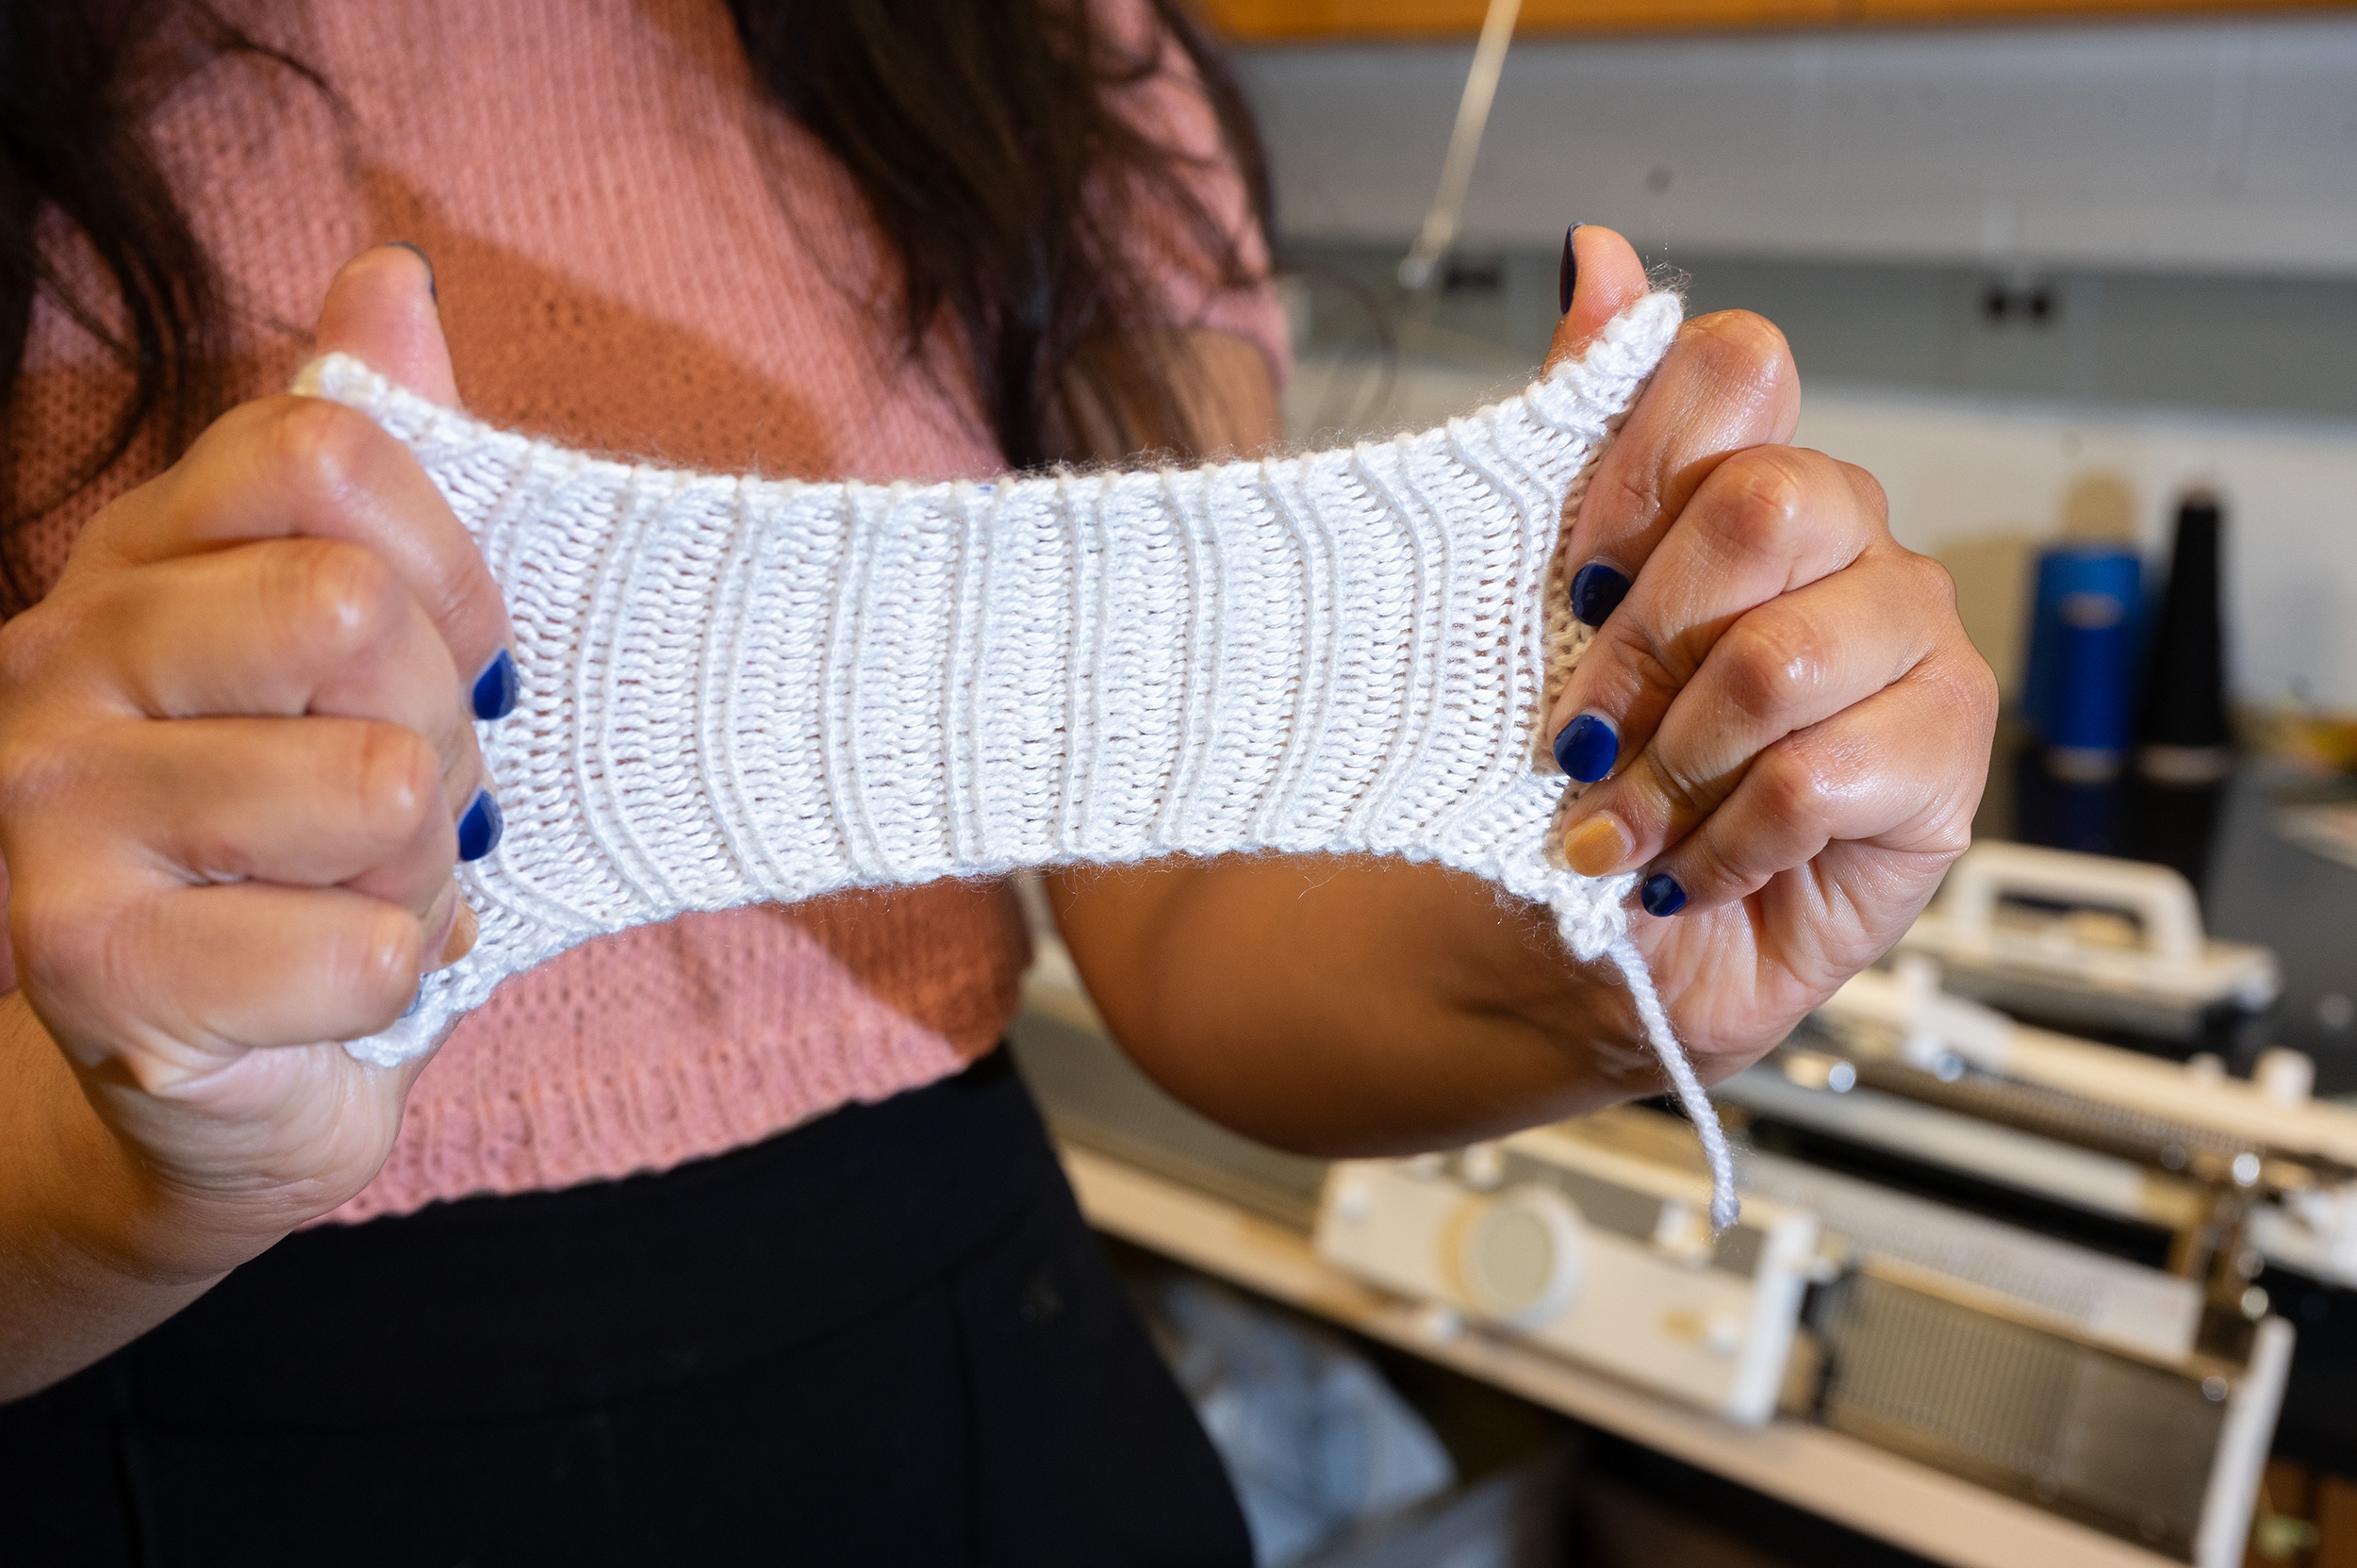 Krishma Singal stretches knit fabric